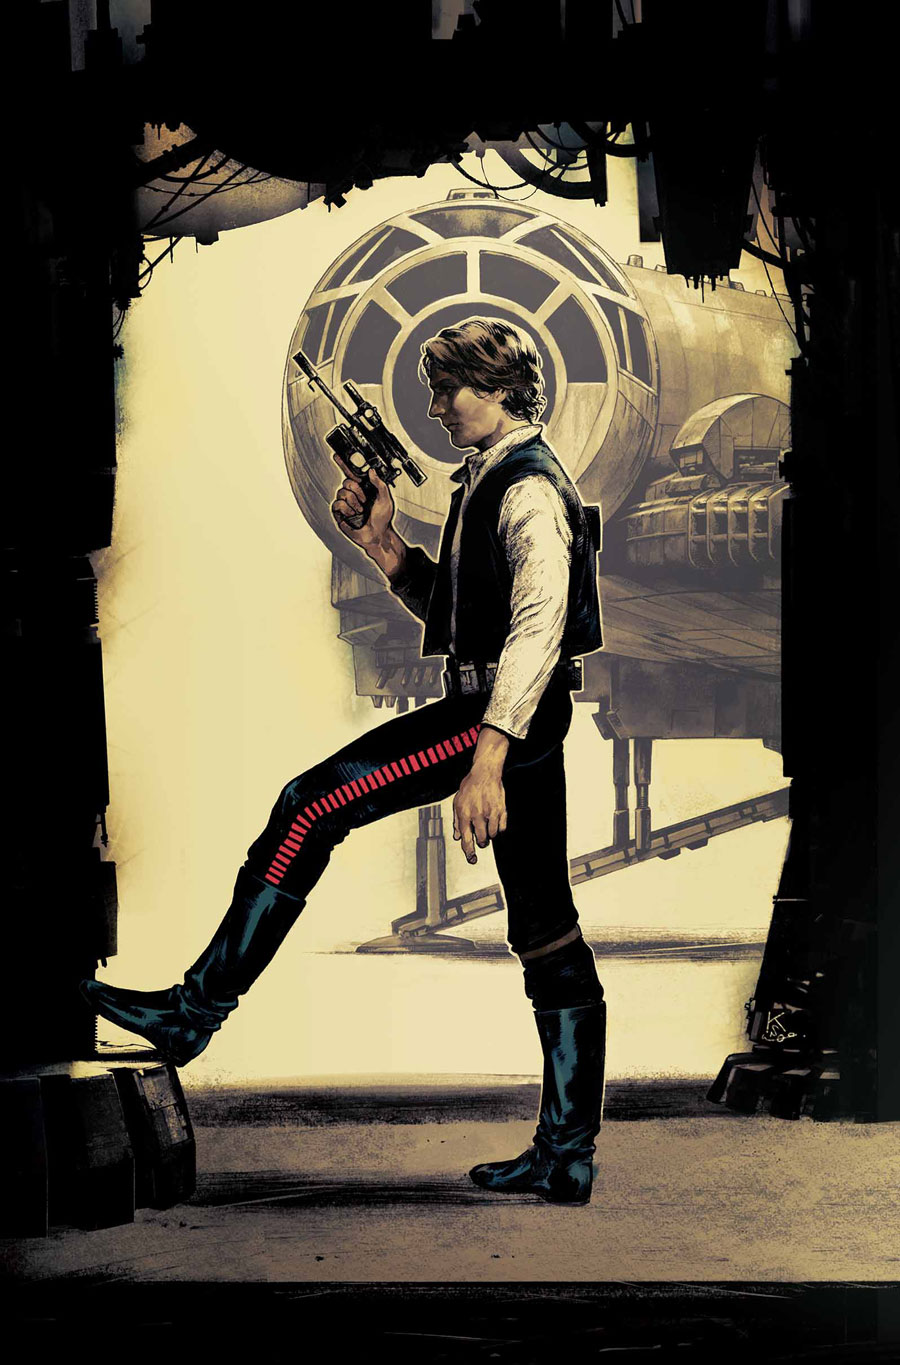 Plik:Han Solo 5 cover art.jpg